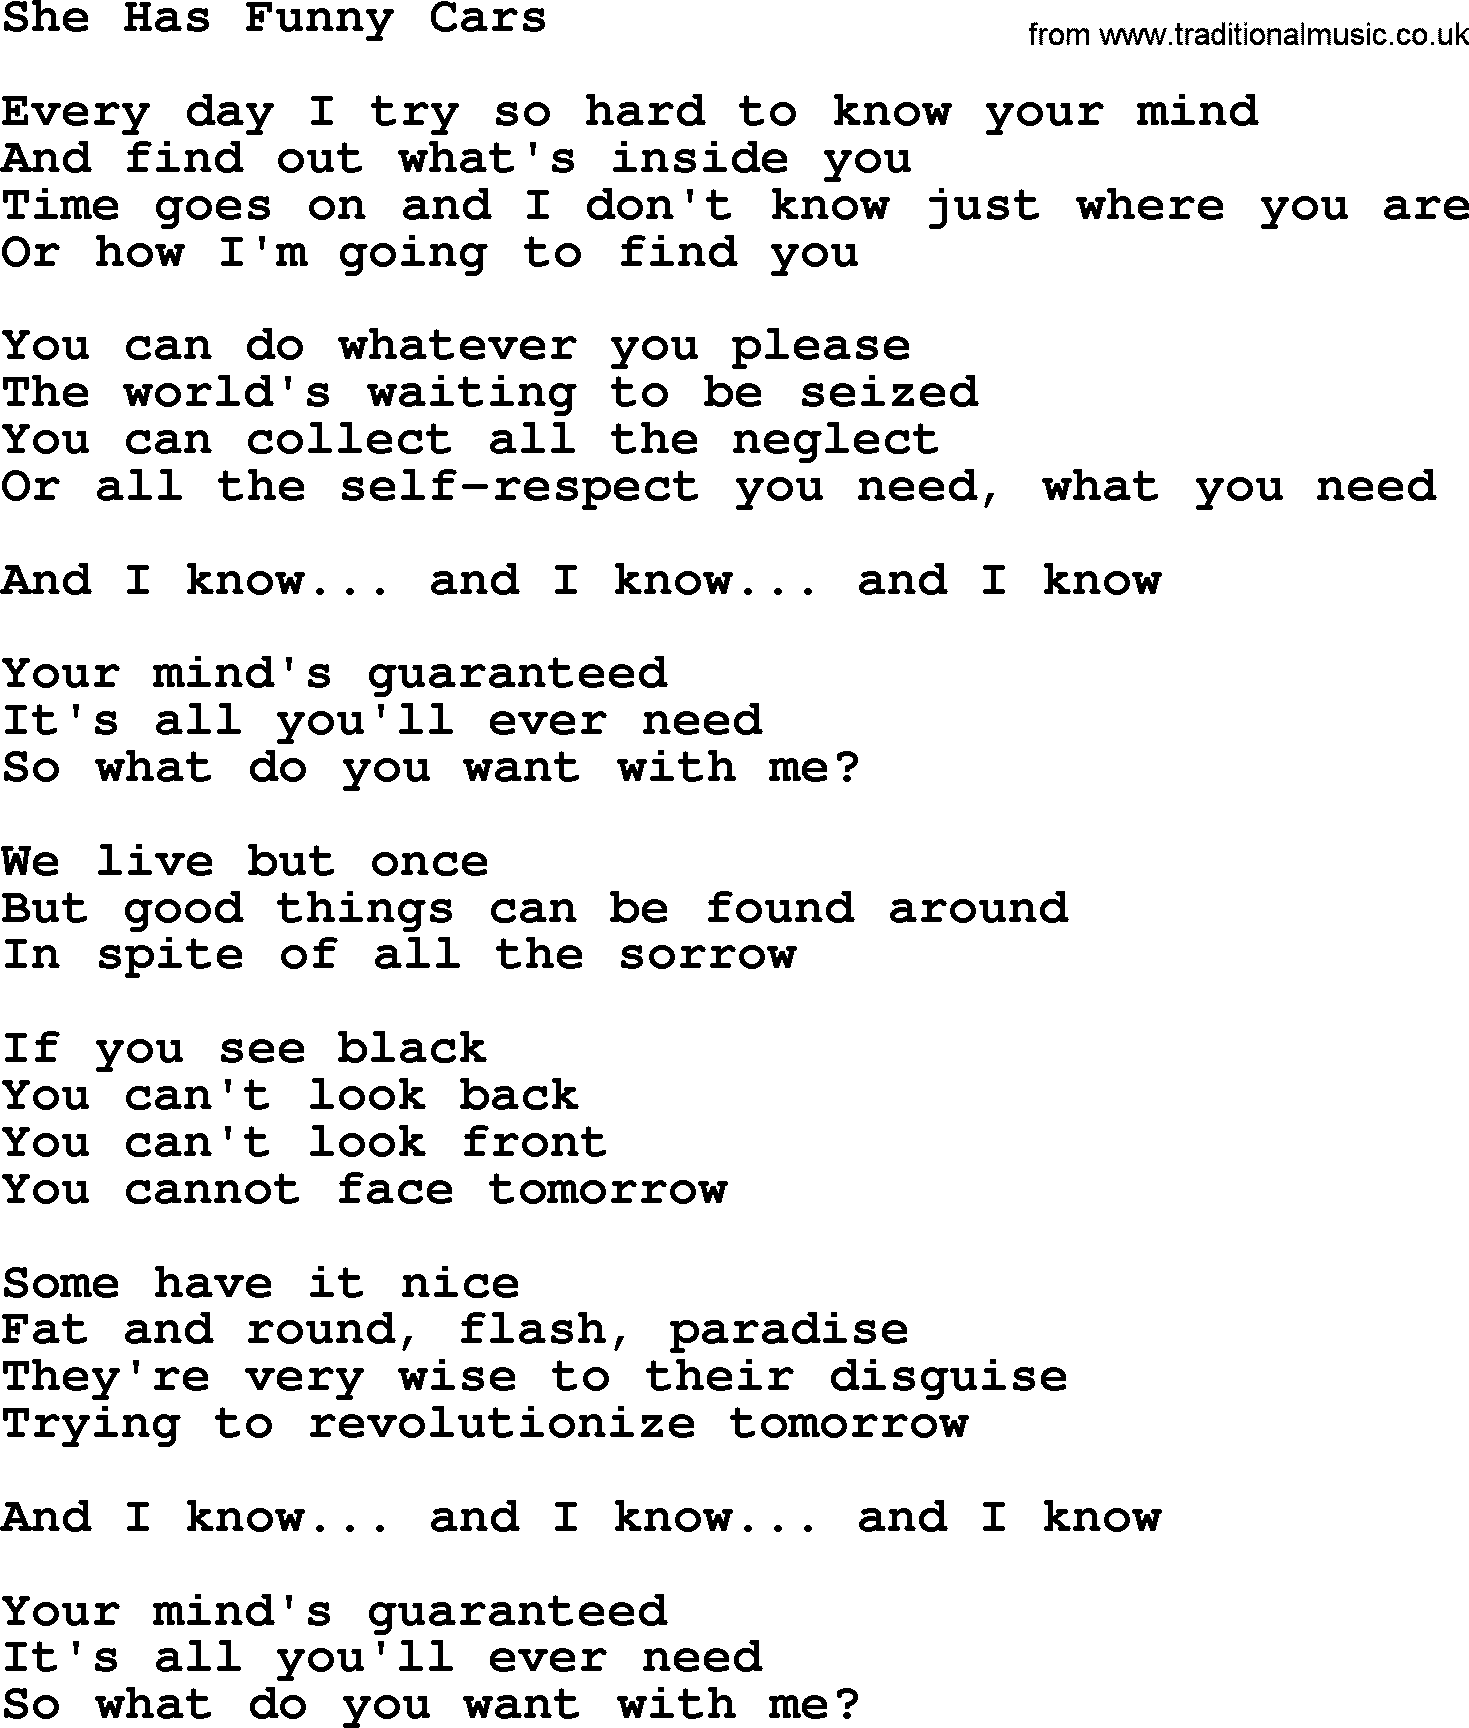 The Byrds song She Has Funny Cars, lyrics